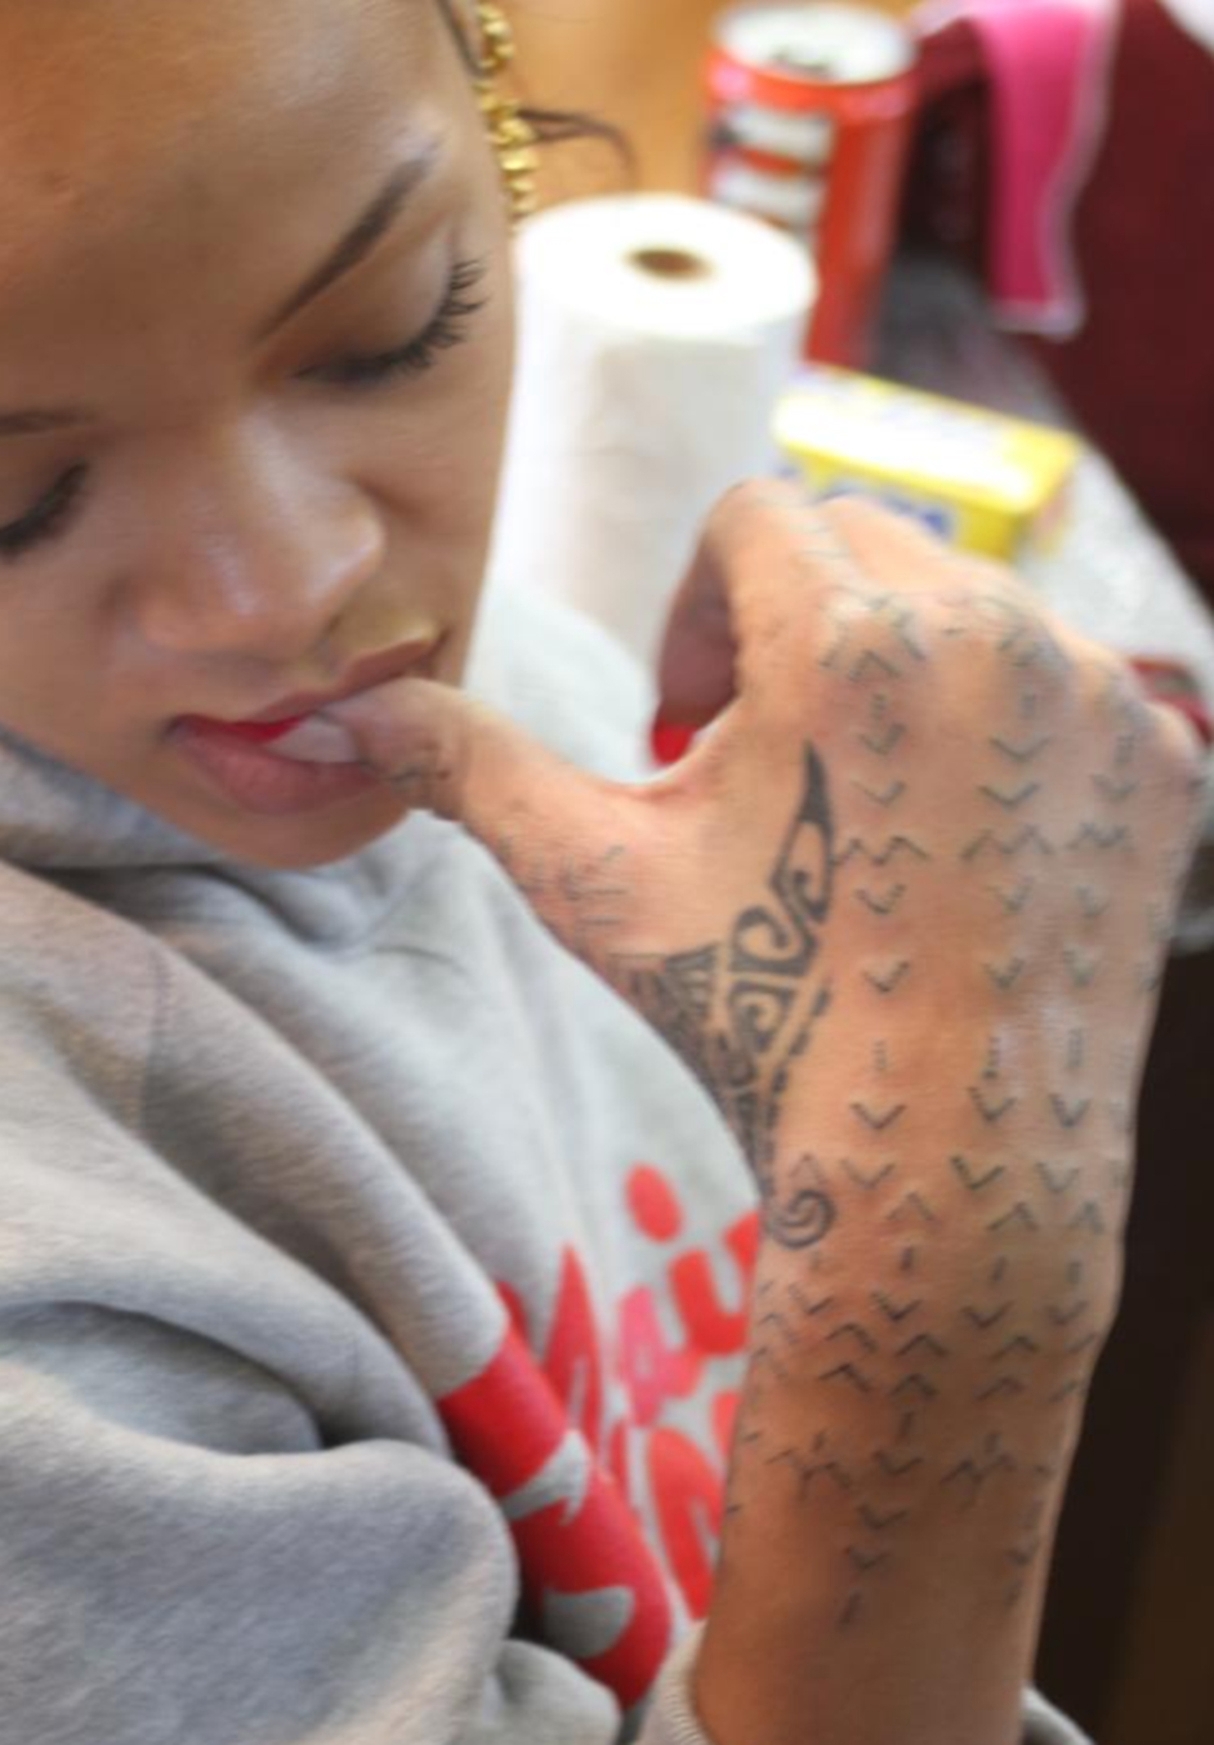 Rihanna Henna Design Back of Hand, Finger Tattoo | Steal Her Style